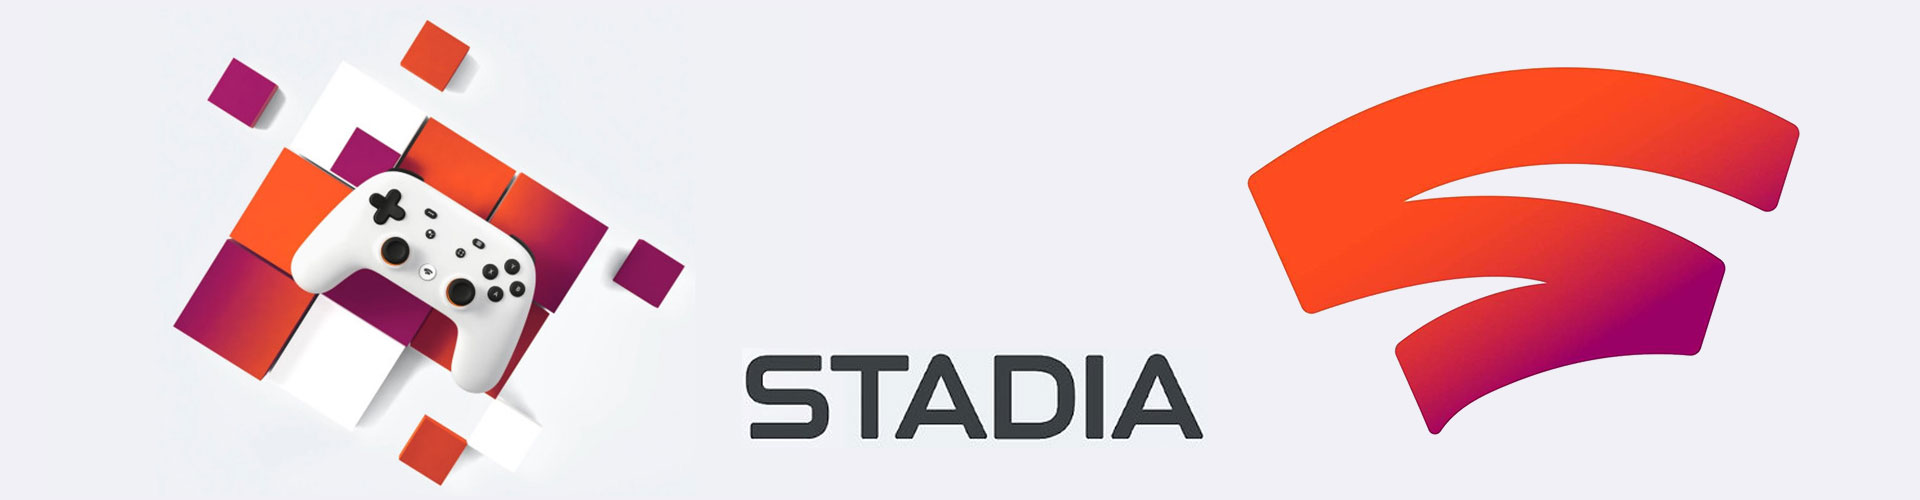 Google Stadia: Cloud based game streaming platform